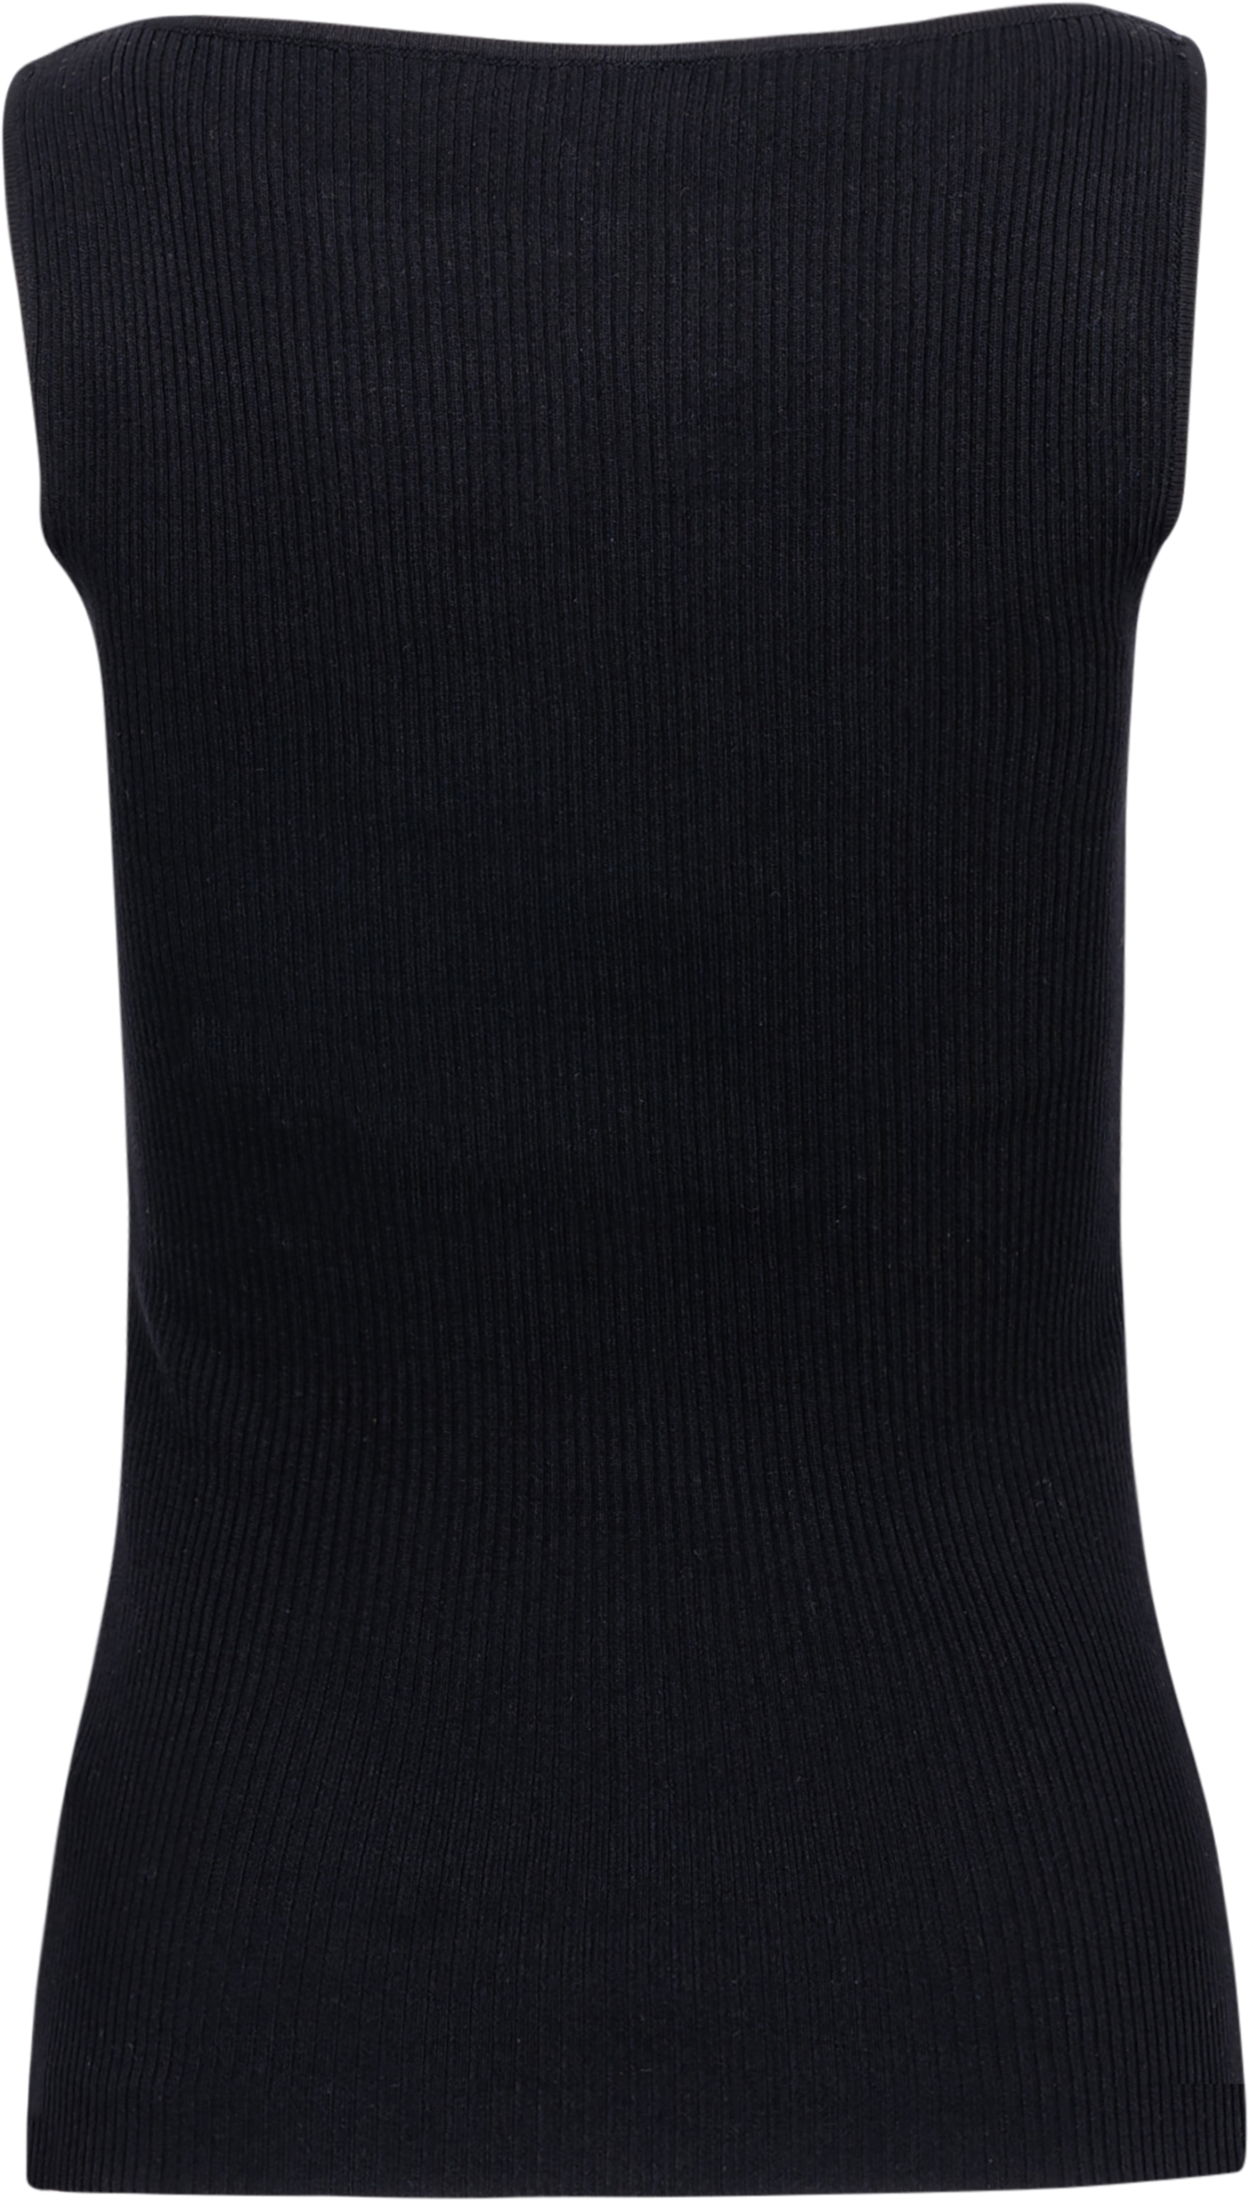 Corine Knit Tank Top - Black